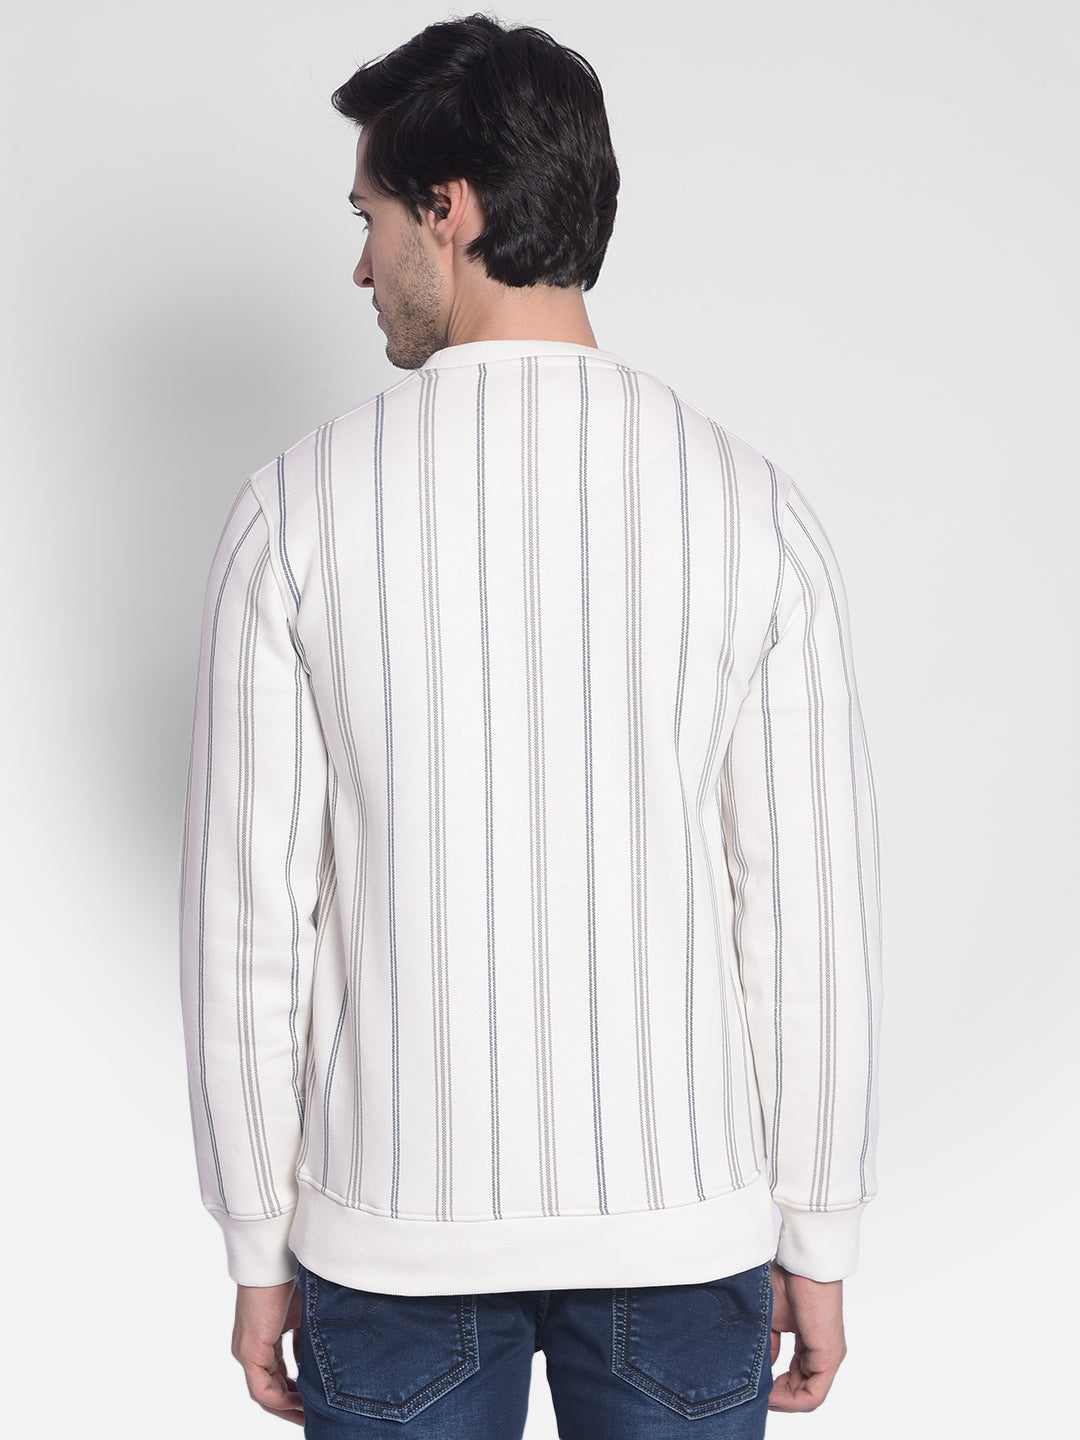 Off White Striped Sweatshirt-Men Sweatshirts-Crimsoune Club